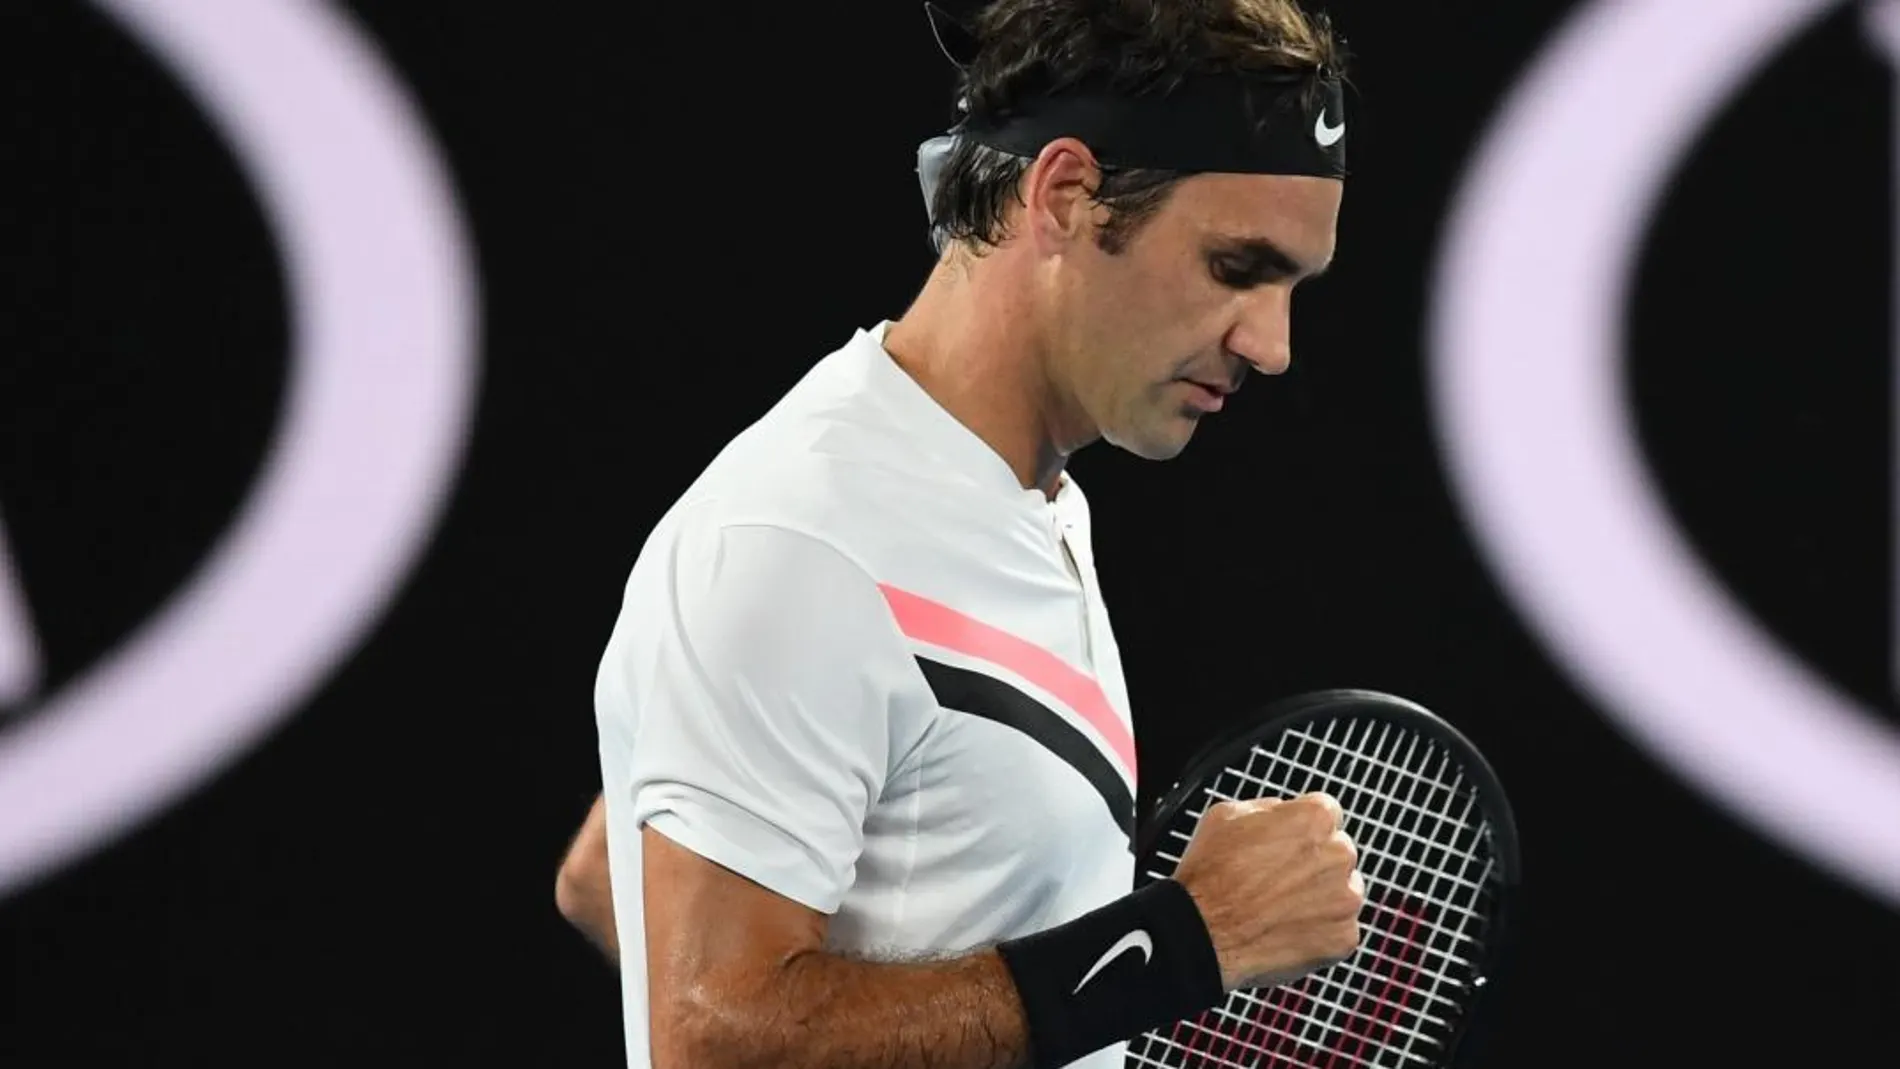 El tenista suizo Roger Federer durante la semifinal del Abierto de Australia que le enfrentó al surcoreano Hyeon Chung, en Melbourne, Australia, hoy